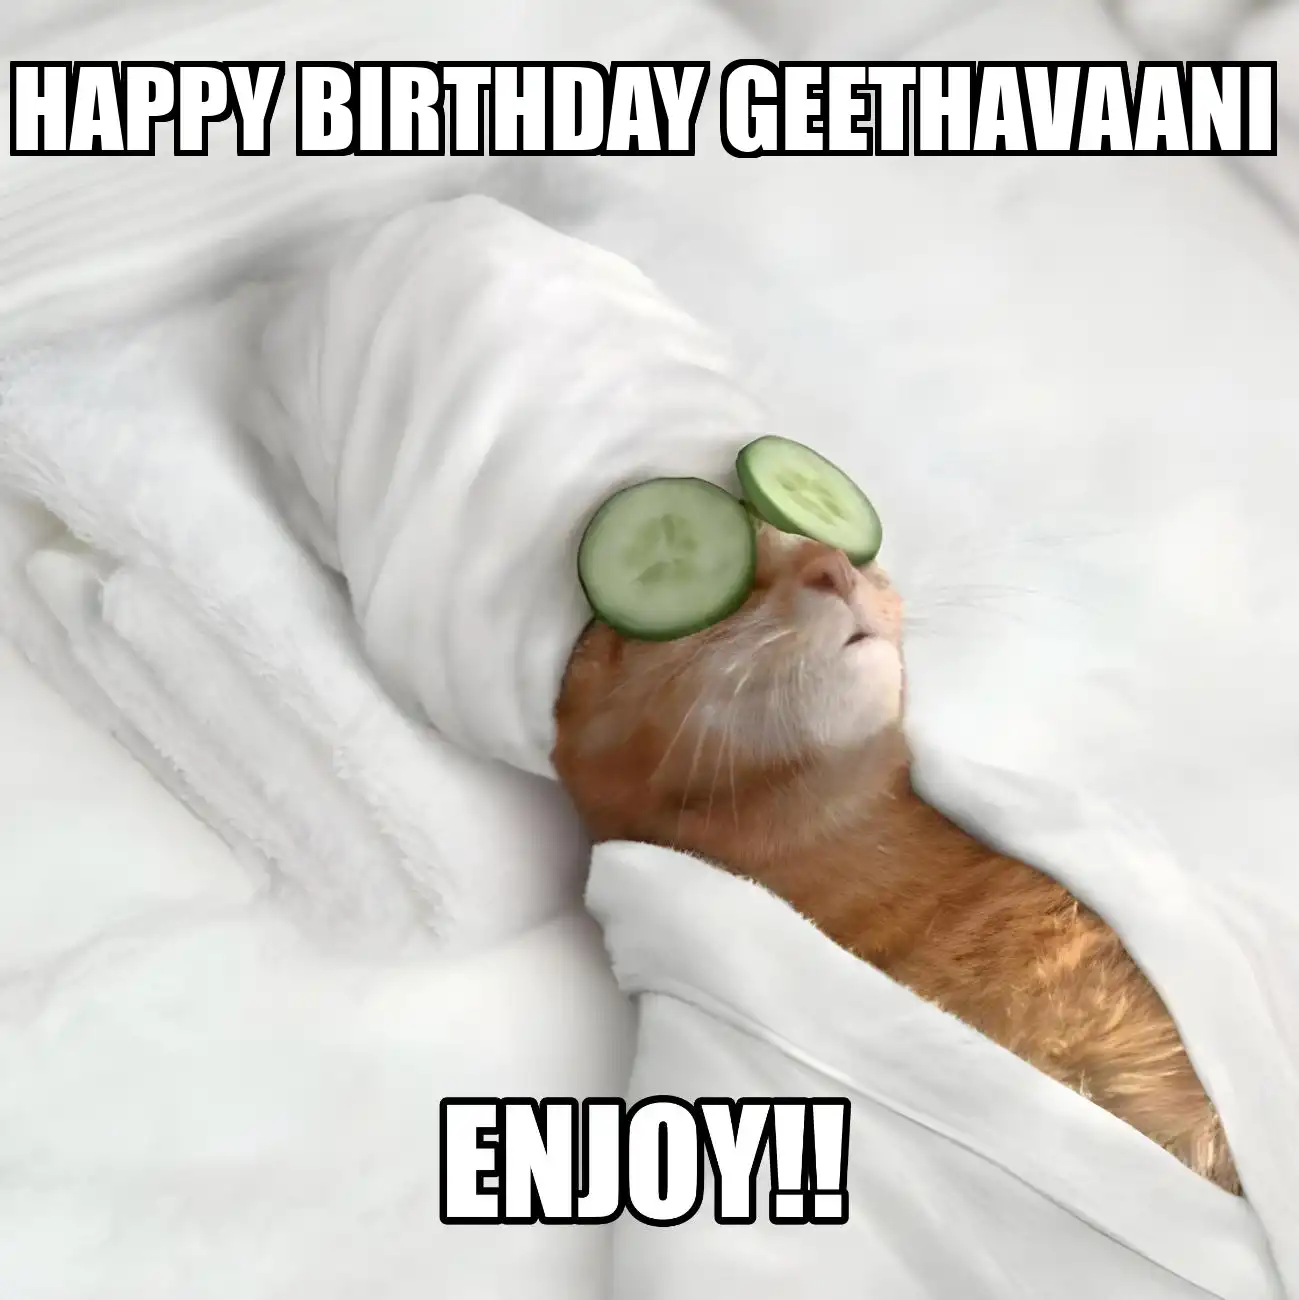 Happy Birthday Geethavaani Enjoy Cat Meme